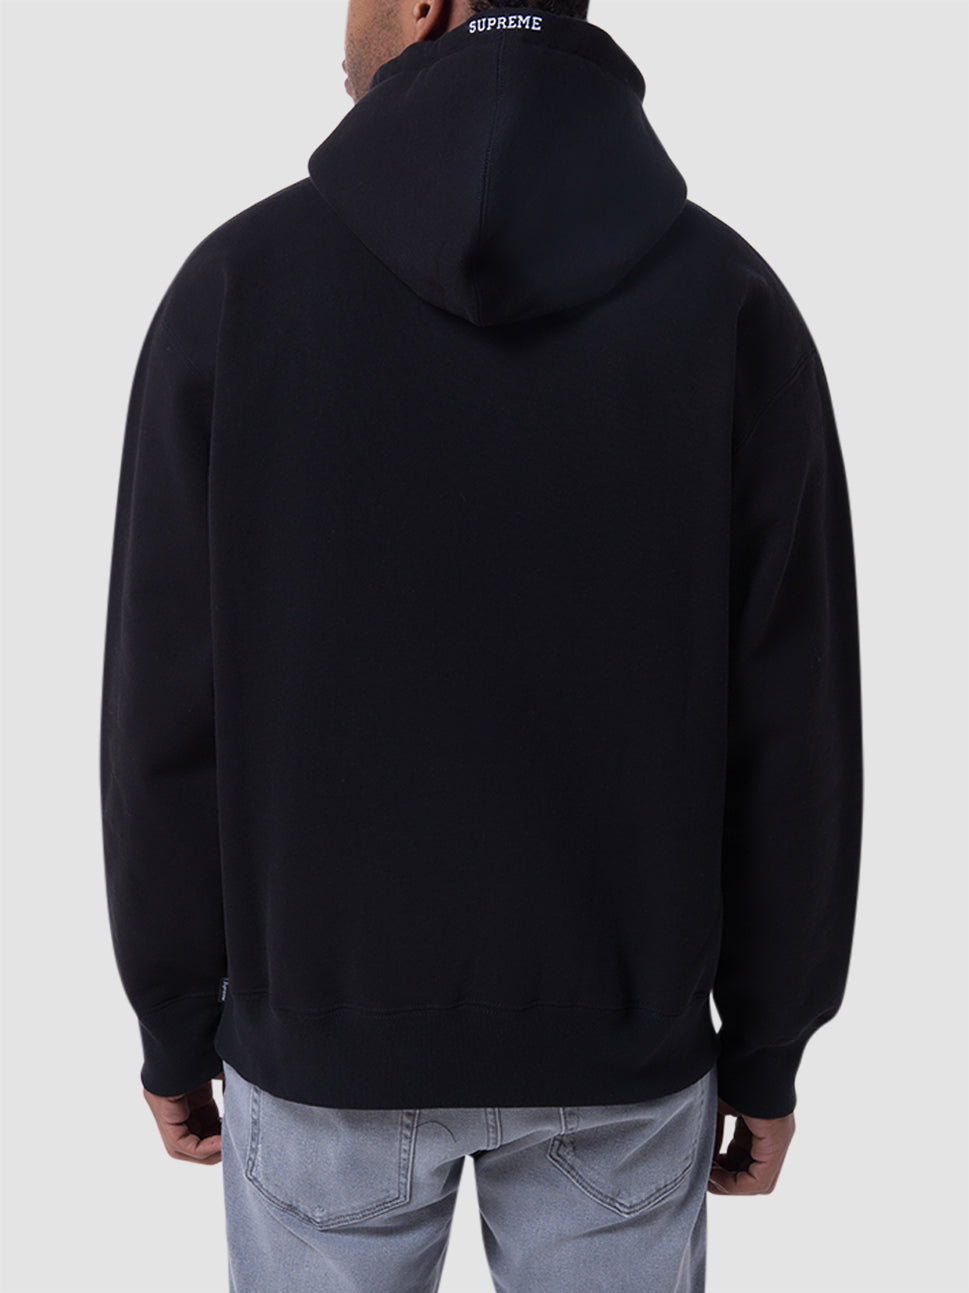 Supreme Black Round Neck Hoodie & Sweatshirt For Unisex price in UAE,  UAE